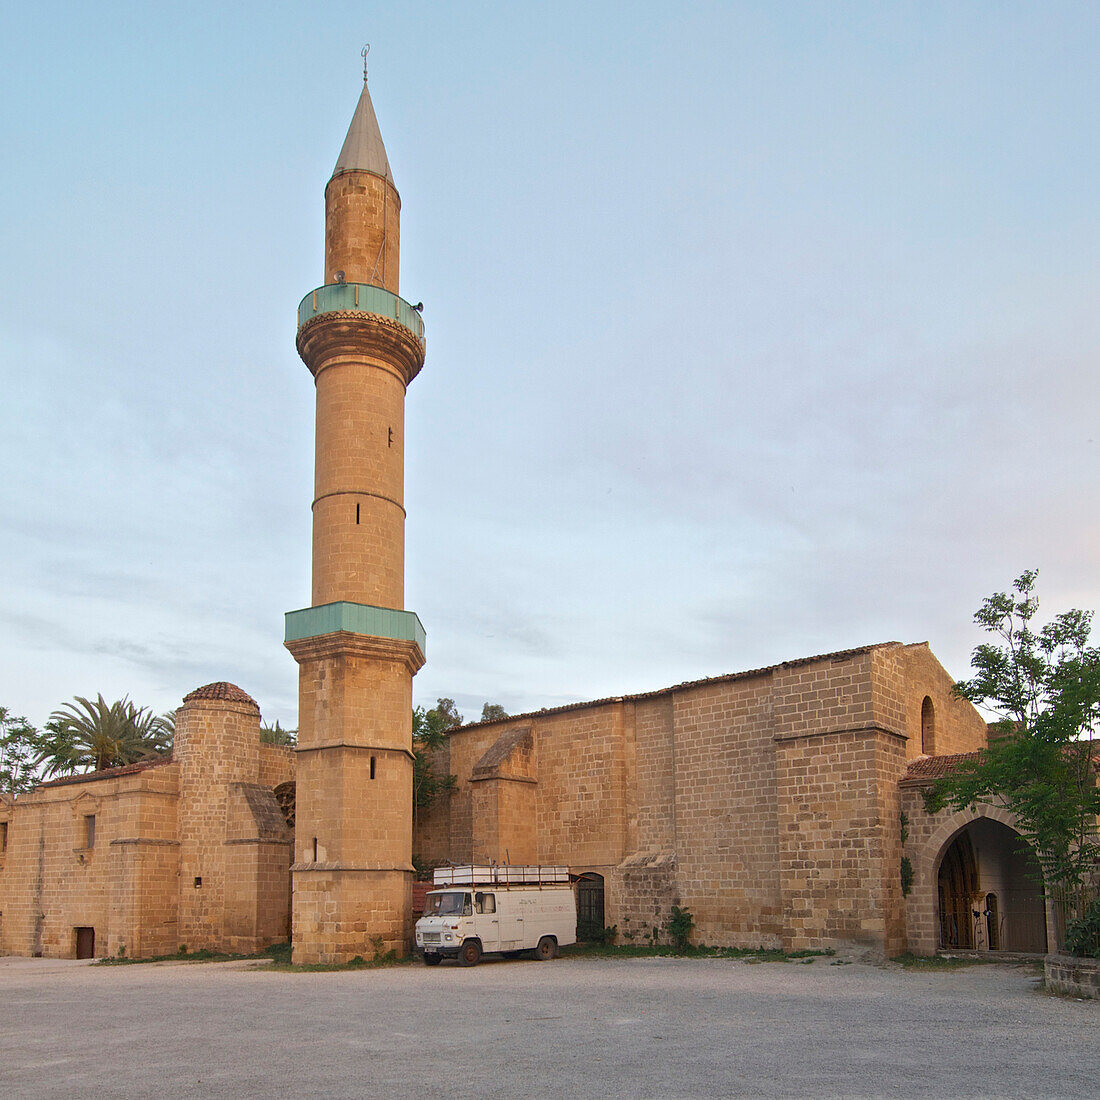 Omeriye mosque in the old town of Lefkosia (Nicosia), Cyprus